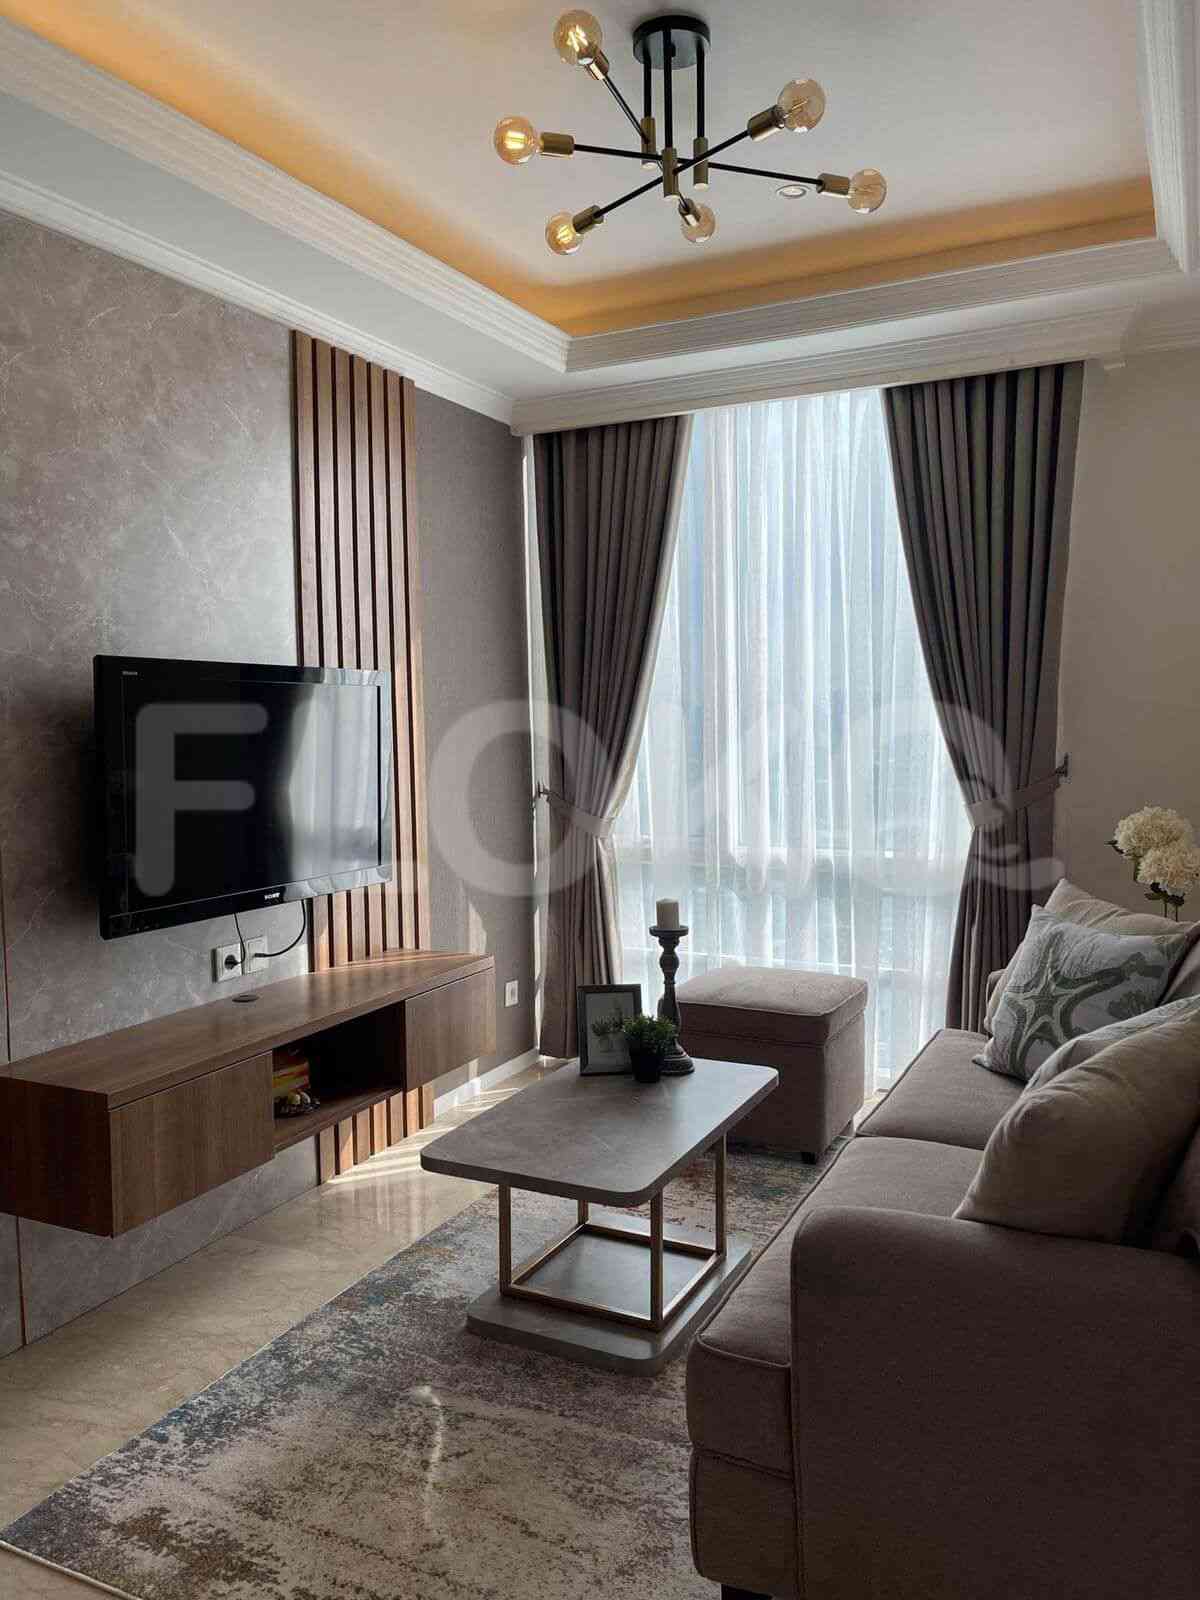 2 Bedroom on 23rd Floor for Rent in FX Residence - fsu54d 2